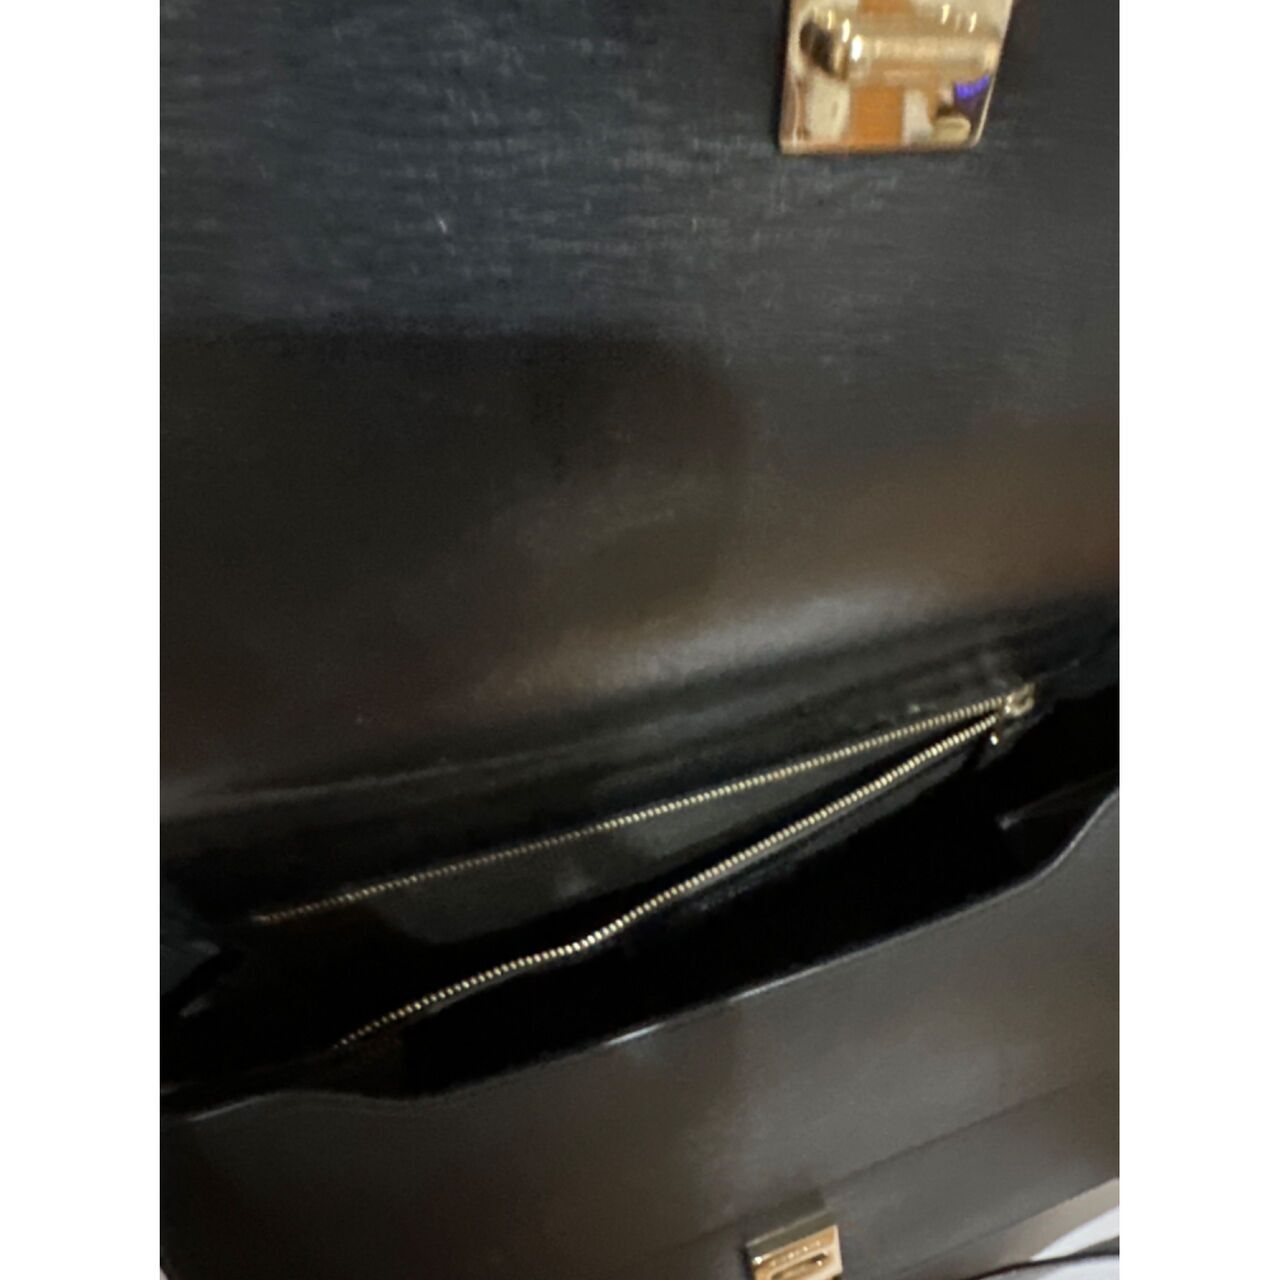 Givenchy Pandora Box Medium Black Leather Shoulder Bag